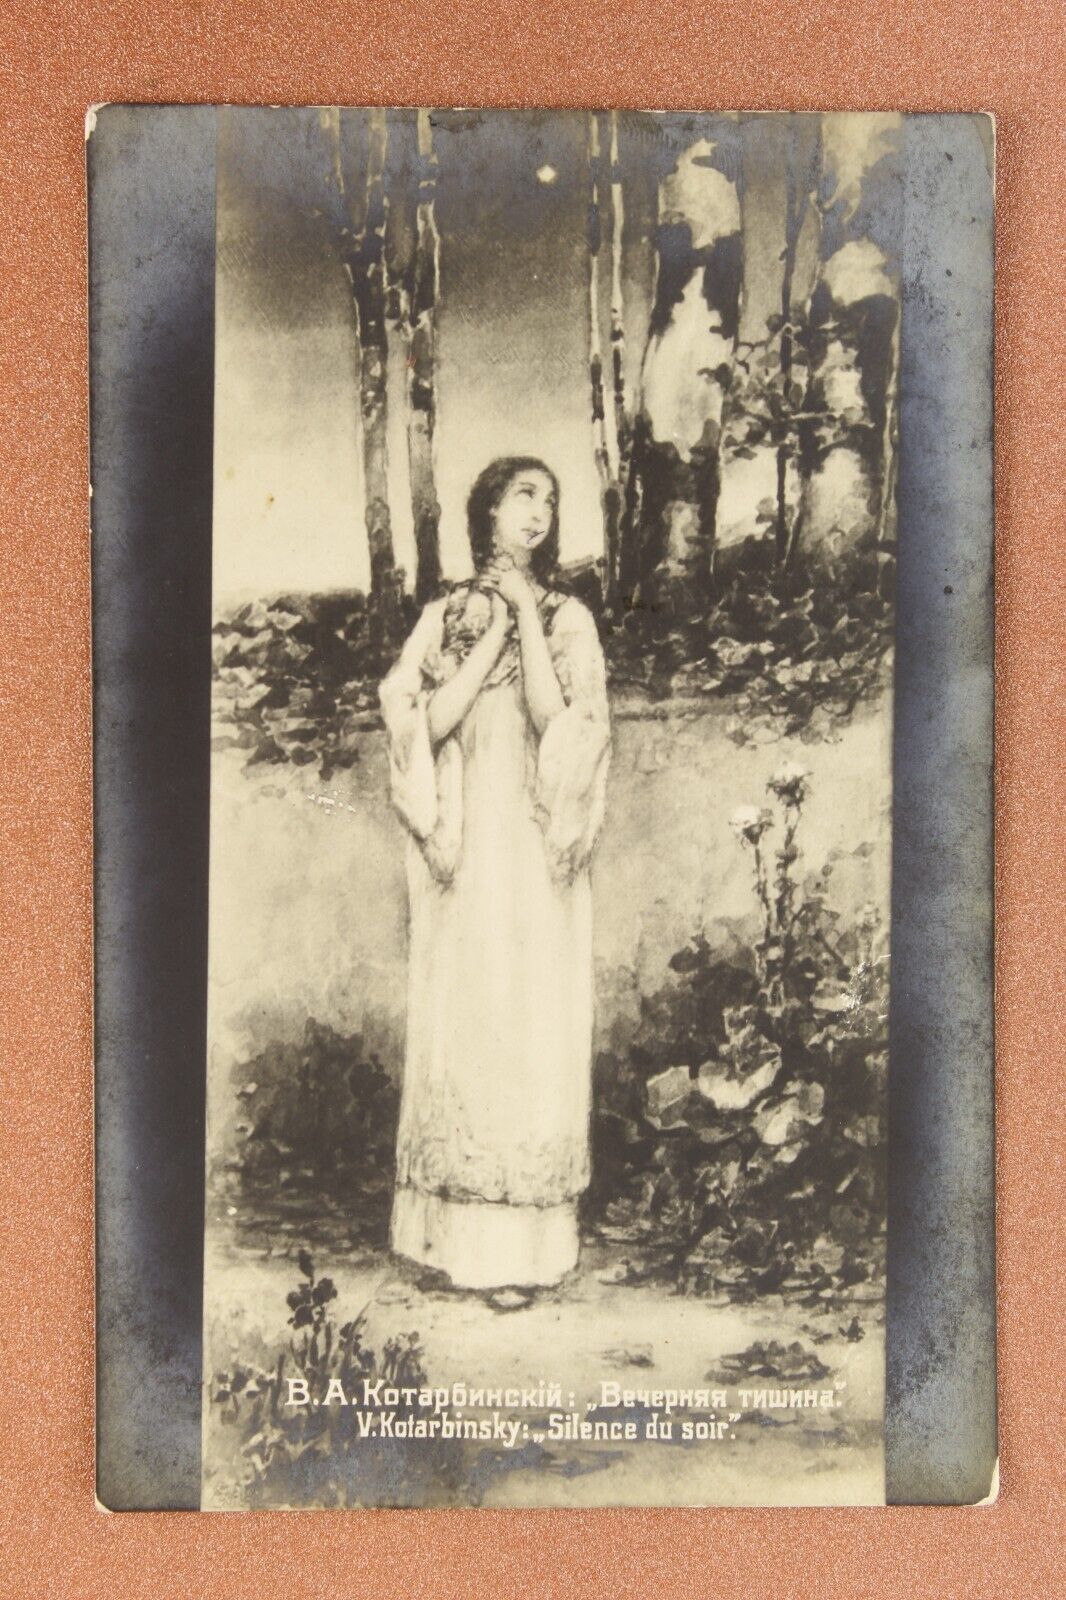 Evening silence. Moon. Romantic woman. Tsarist Russia postcard 1906s KOTARBINSKY